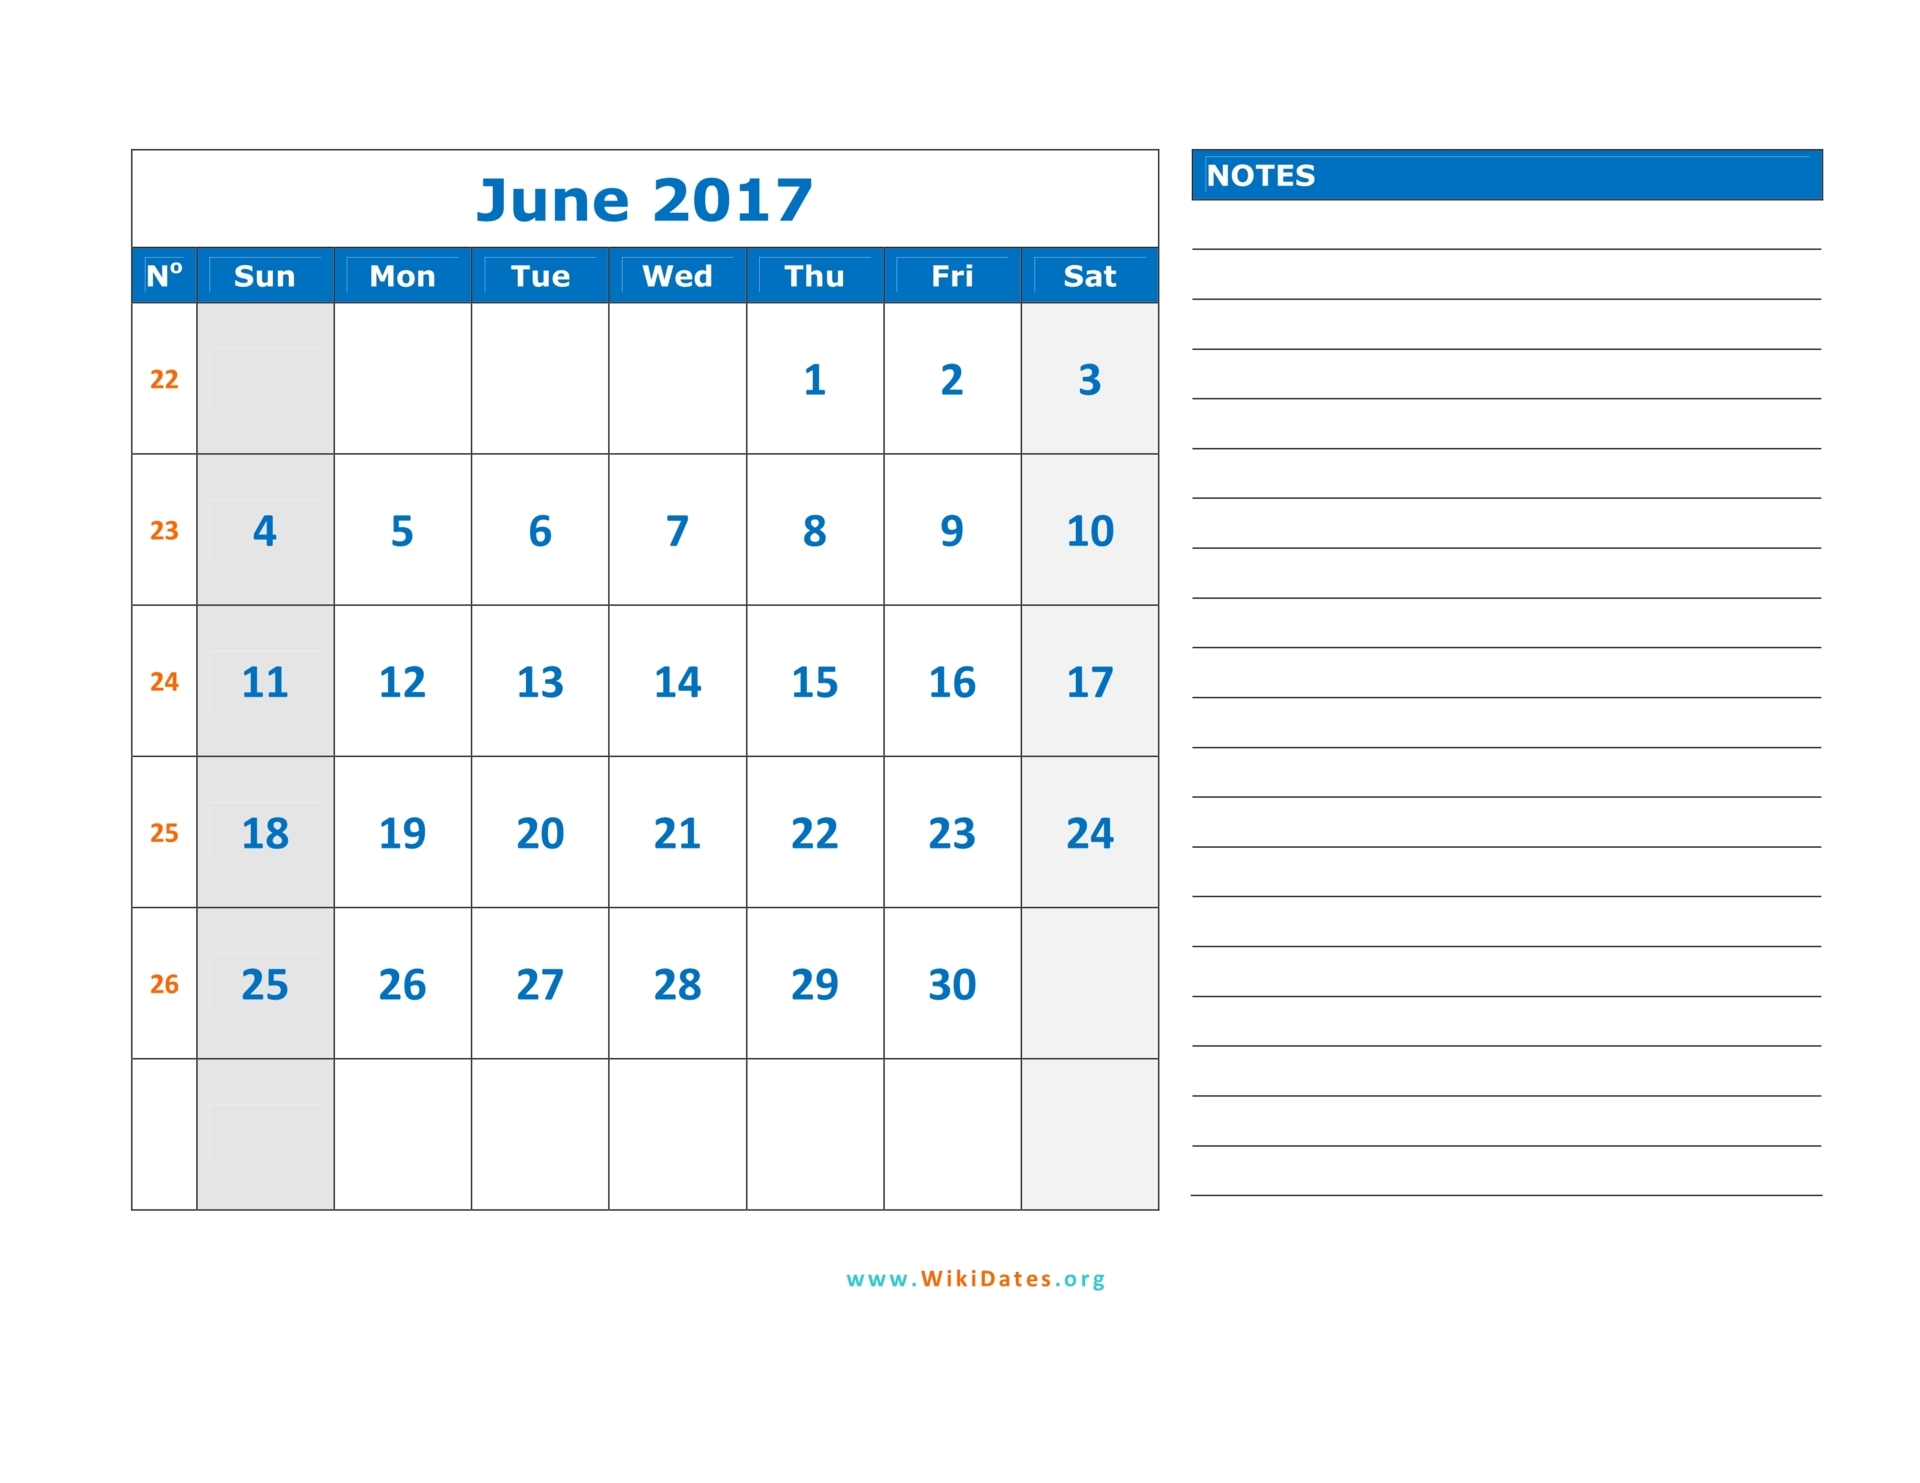 june-2017-calendar-wikidates